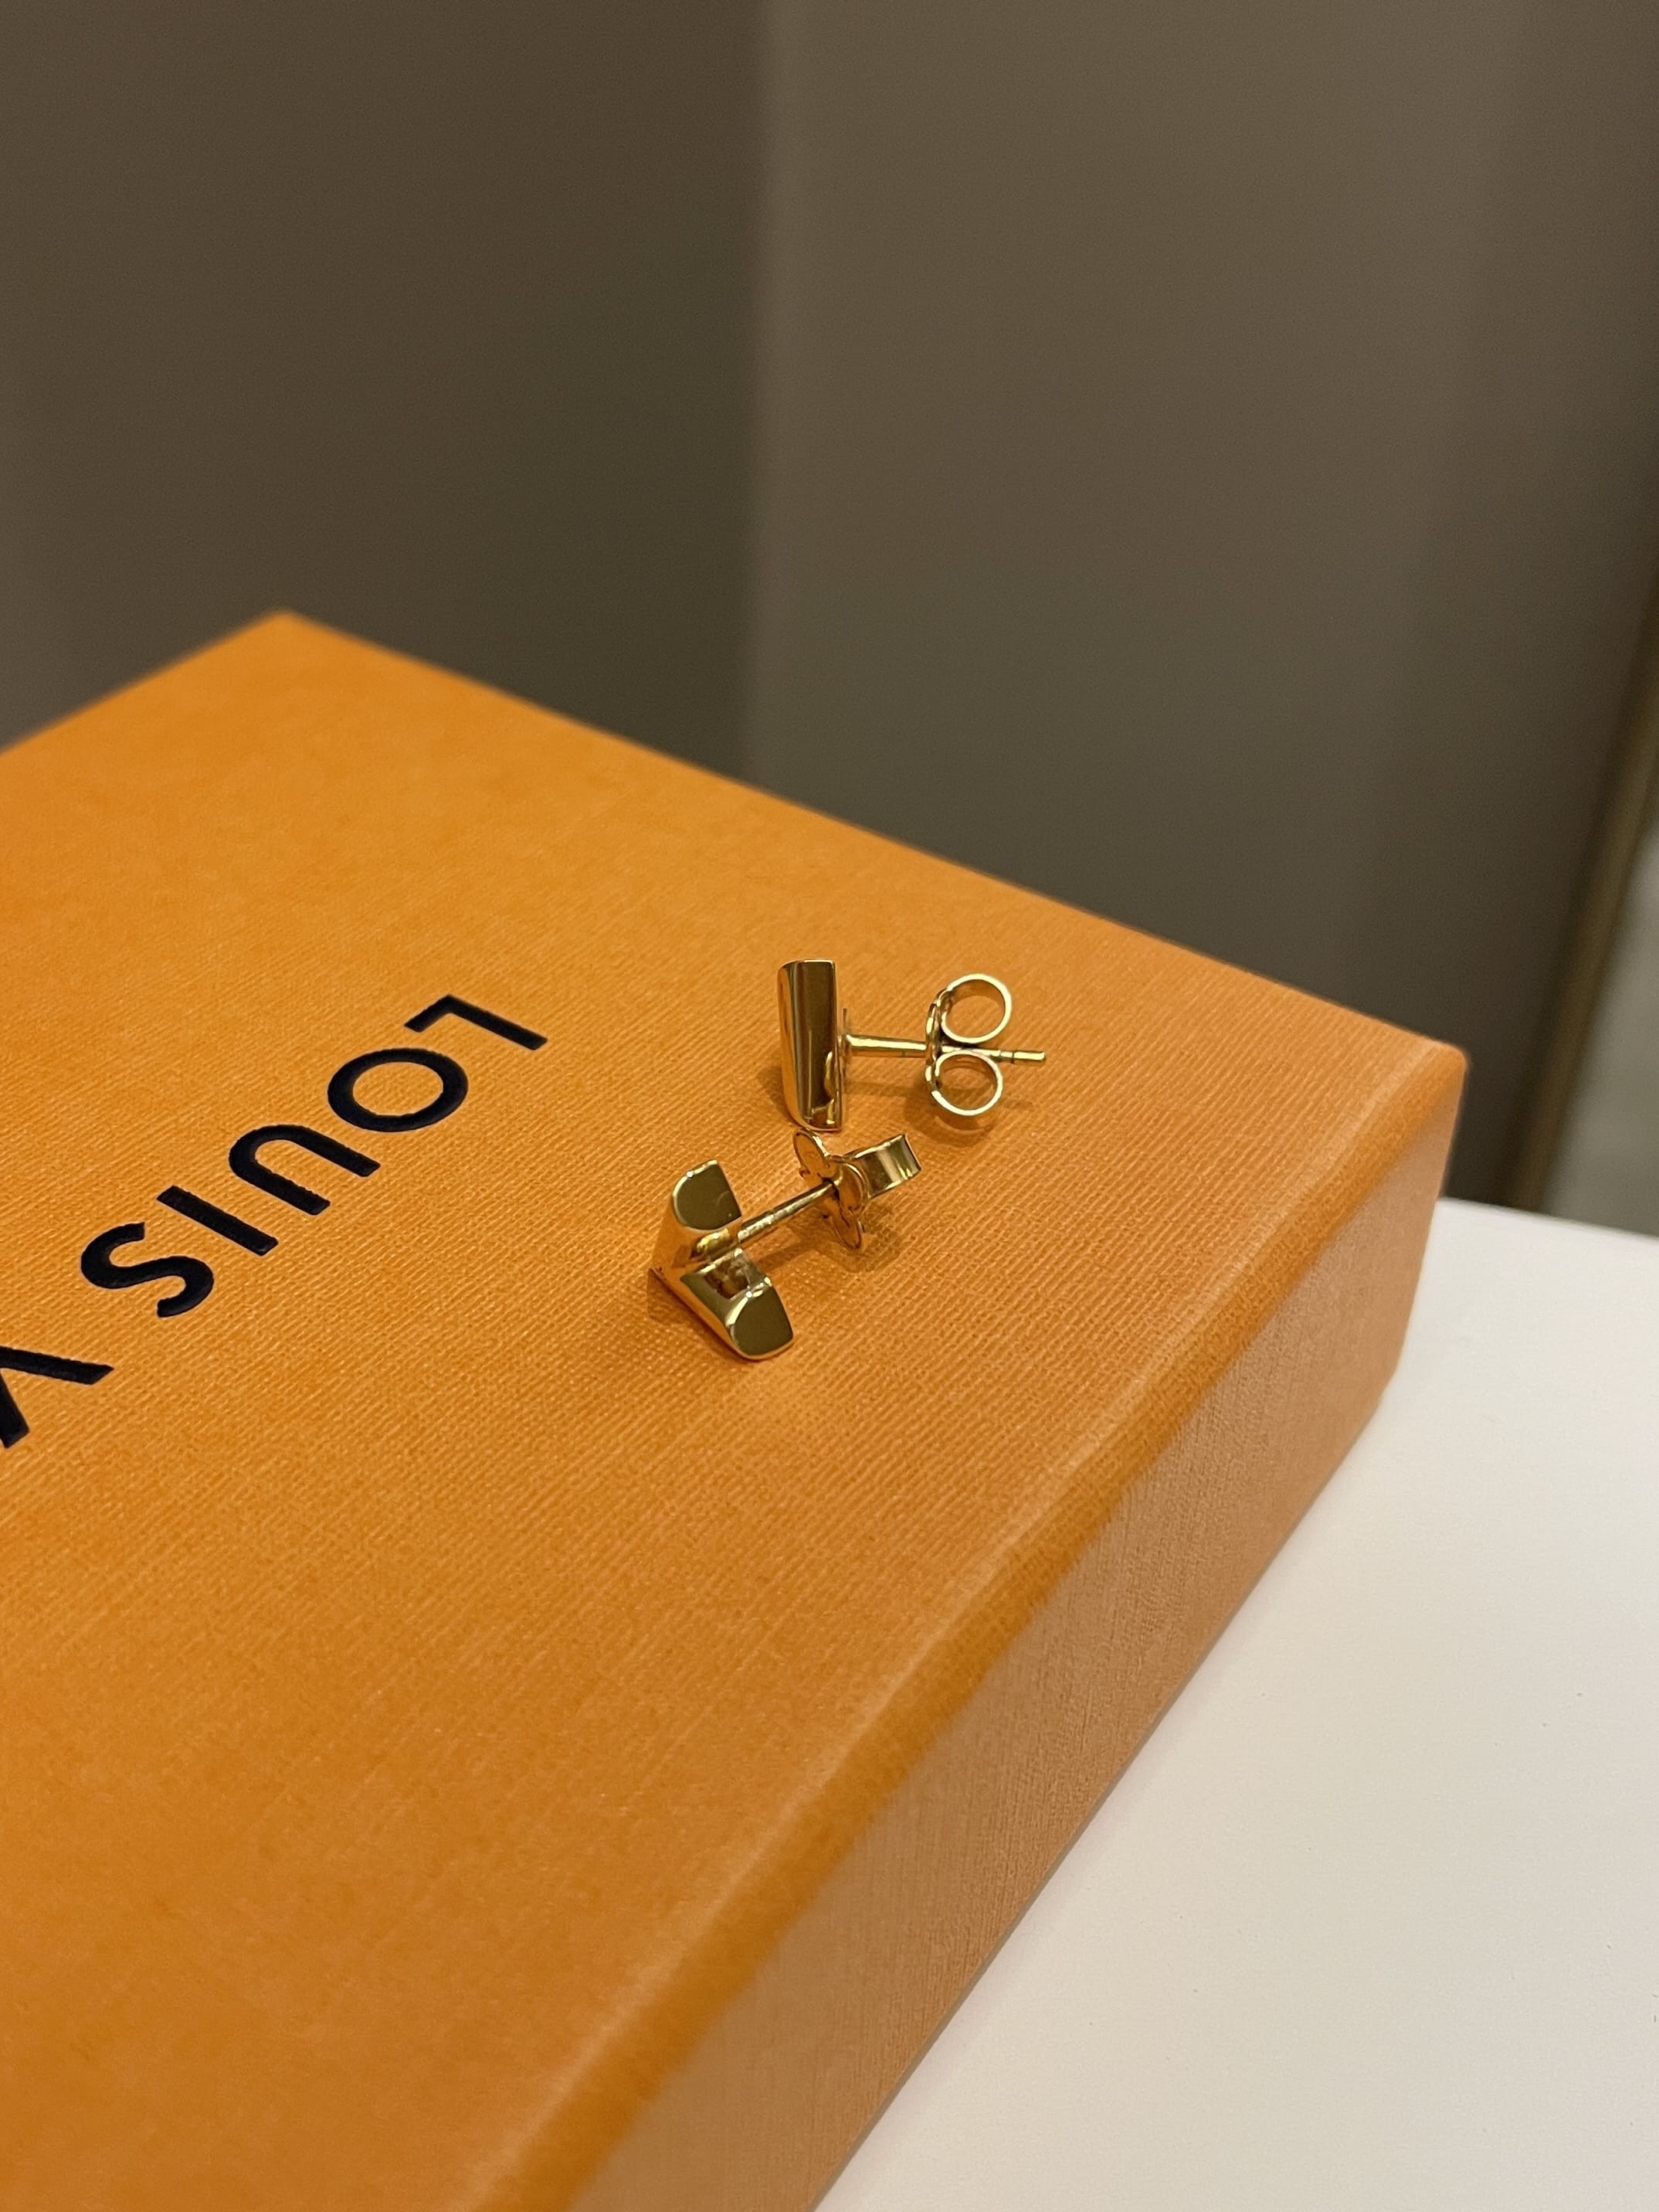 Louis Vuitton Essential V Stud Earrings